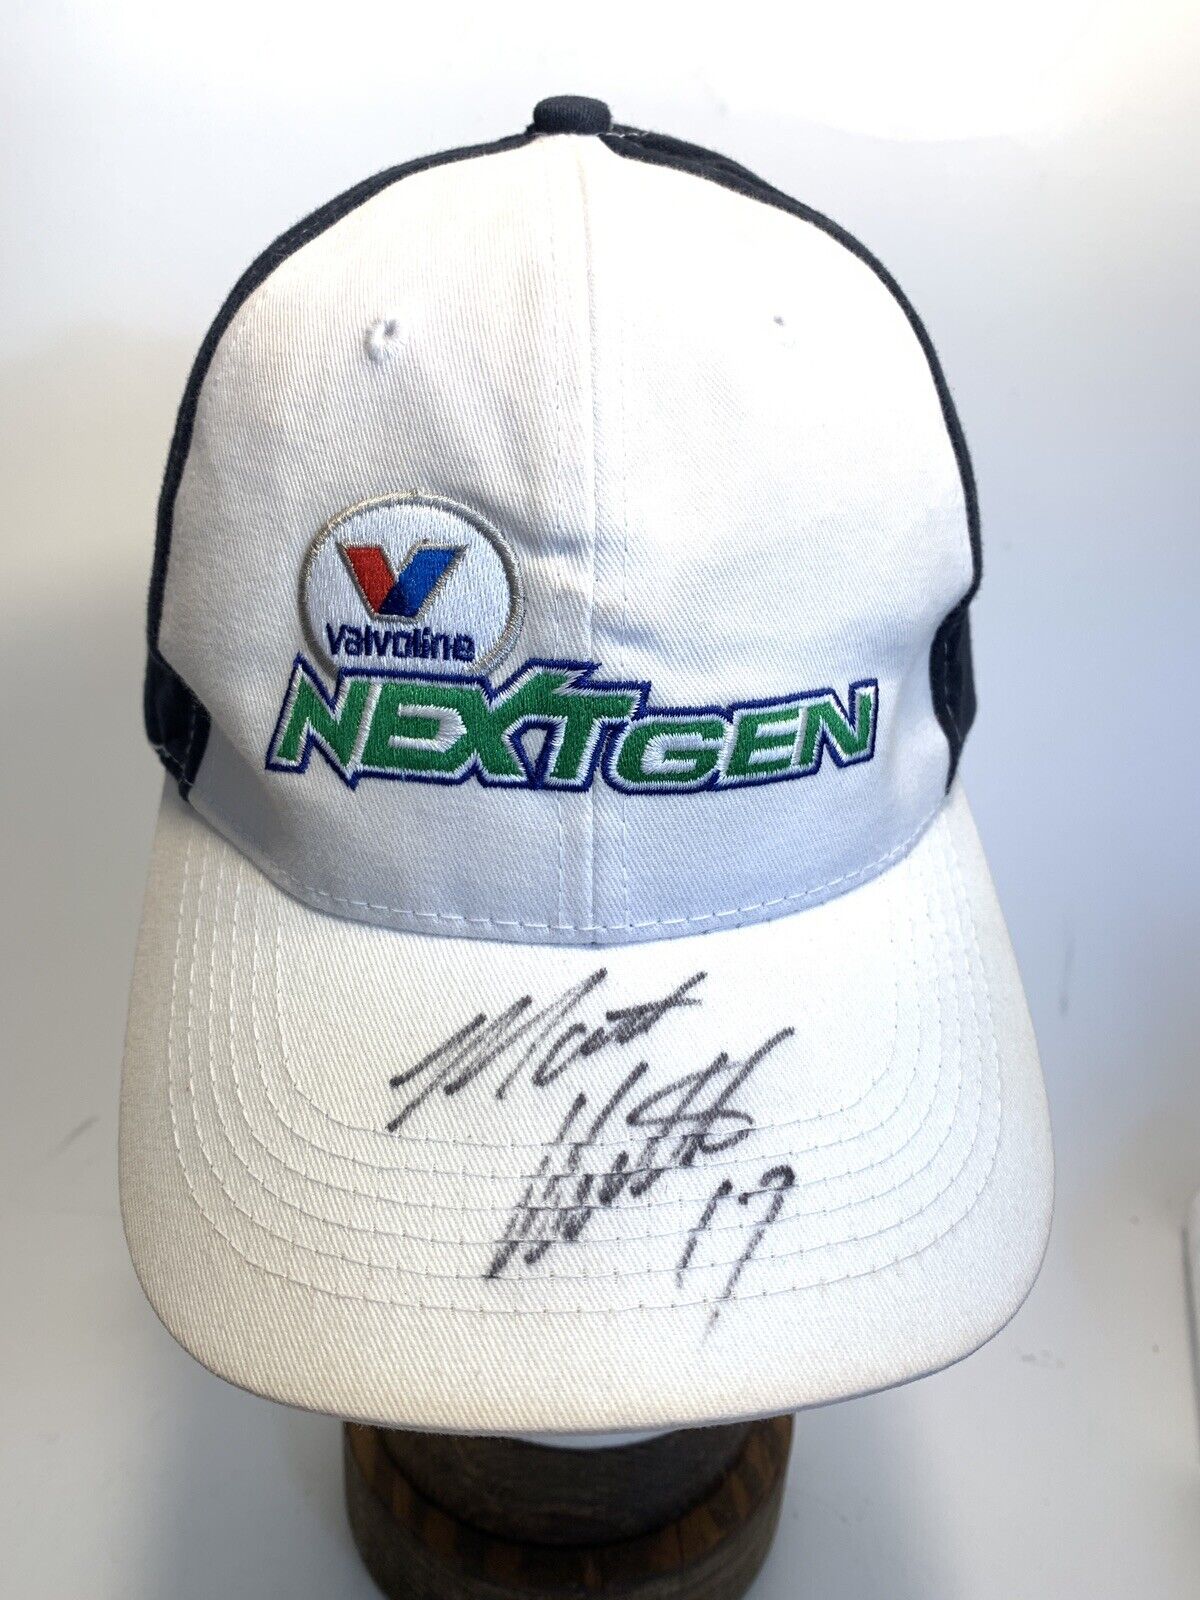 Matt Kenseth Autographed Valvoline Nextgen Hat Cap Adjustable Nascar Driver (iaz